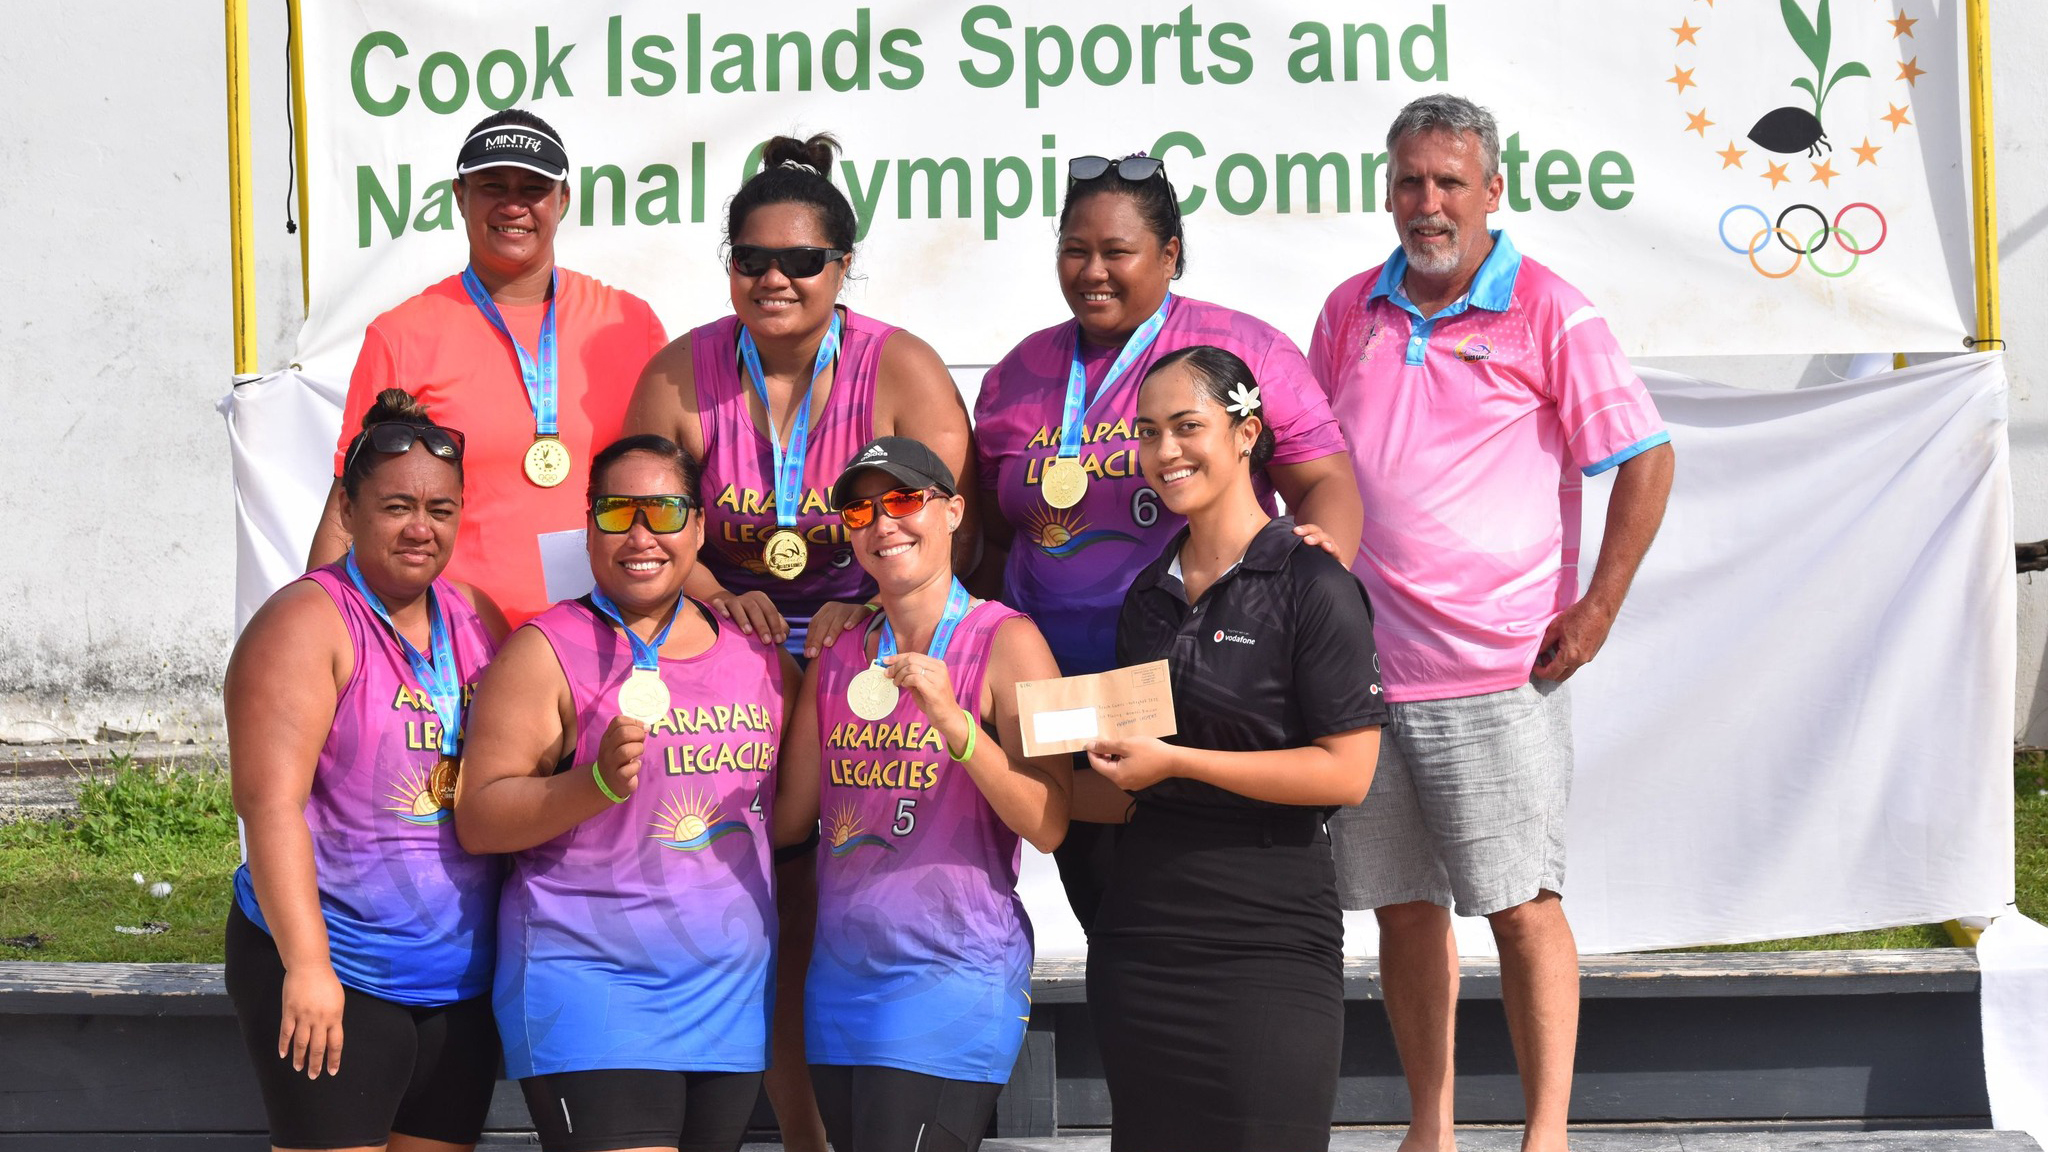 Arapaea Legacies win gold in beach volleyball comp